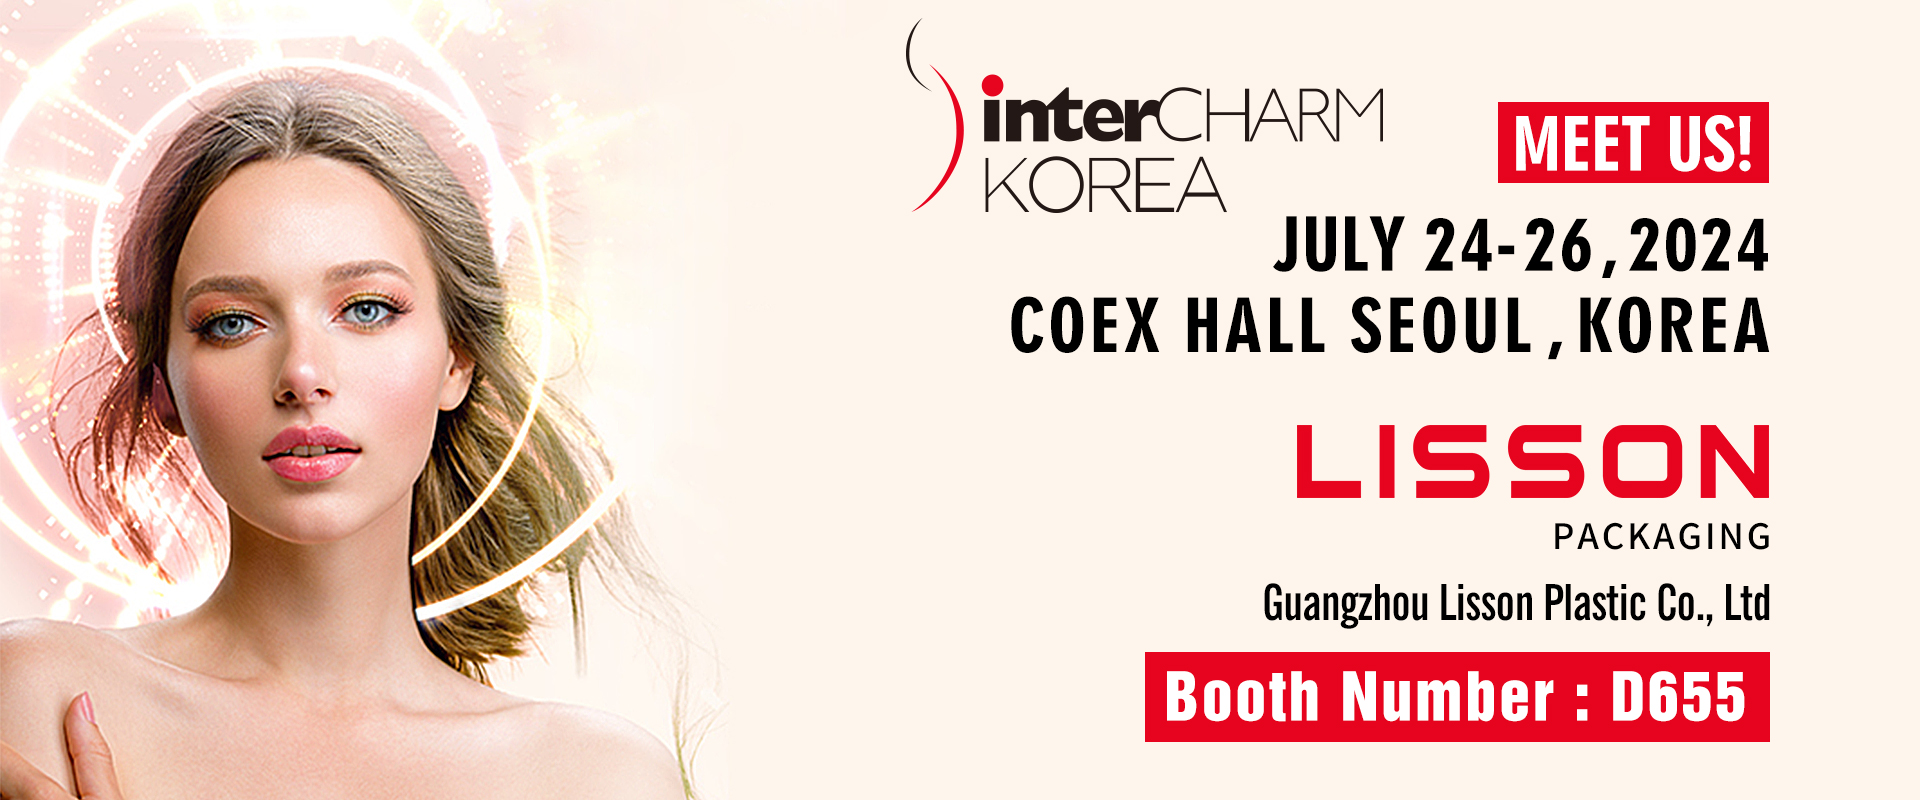 Korea Exhibition-COEX HALL D655 SEOUL, KOREA 2024